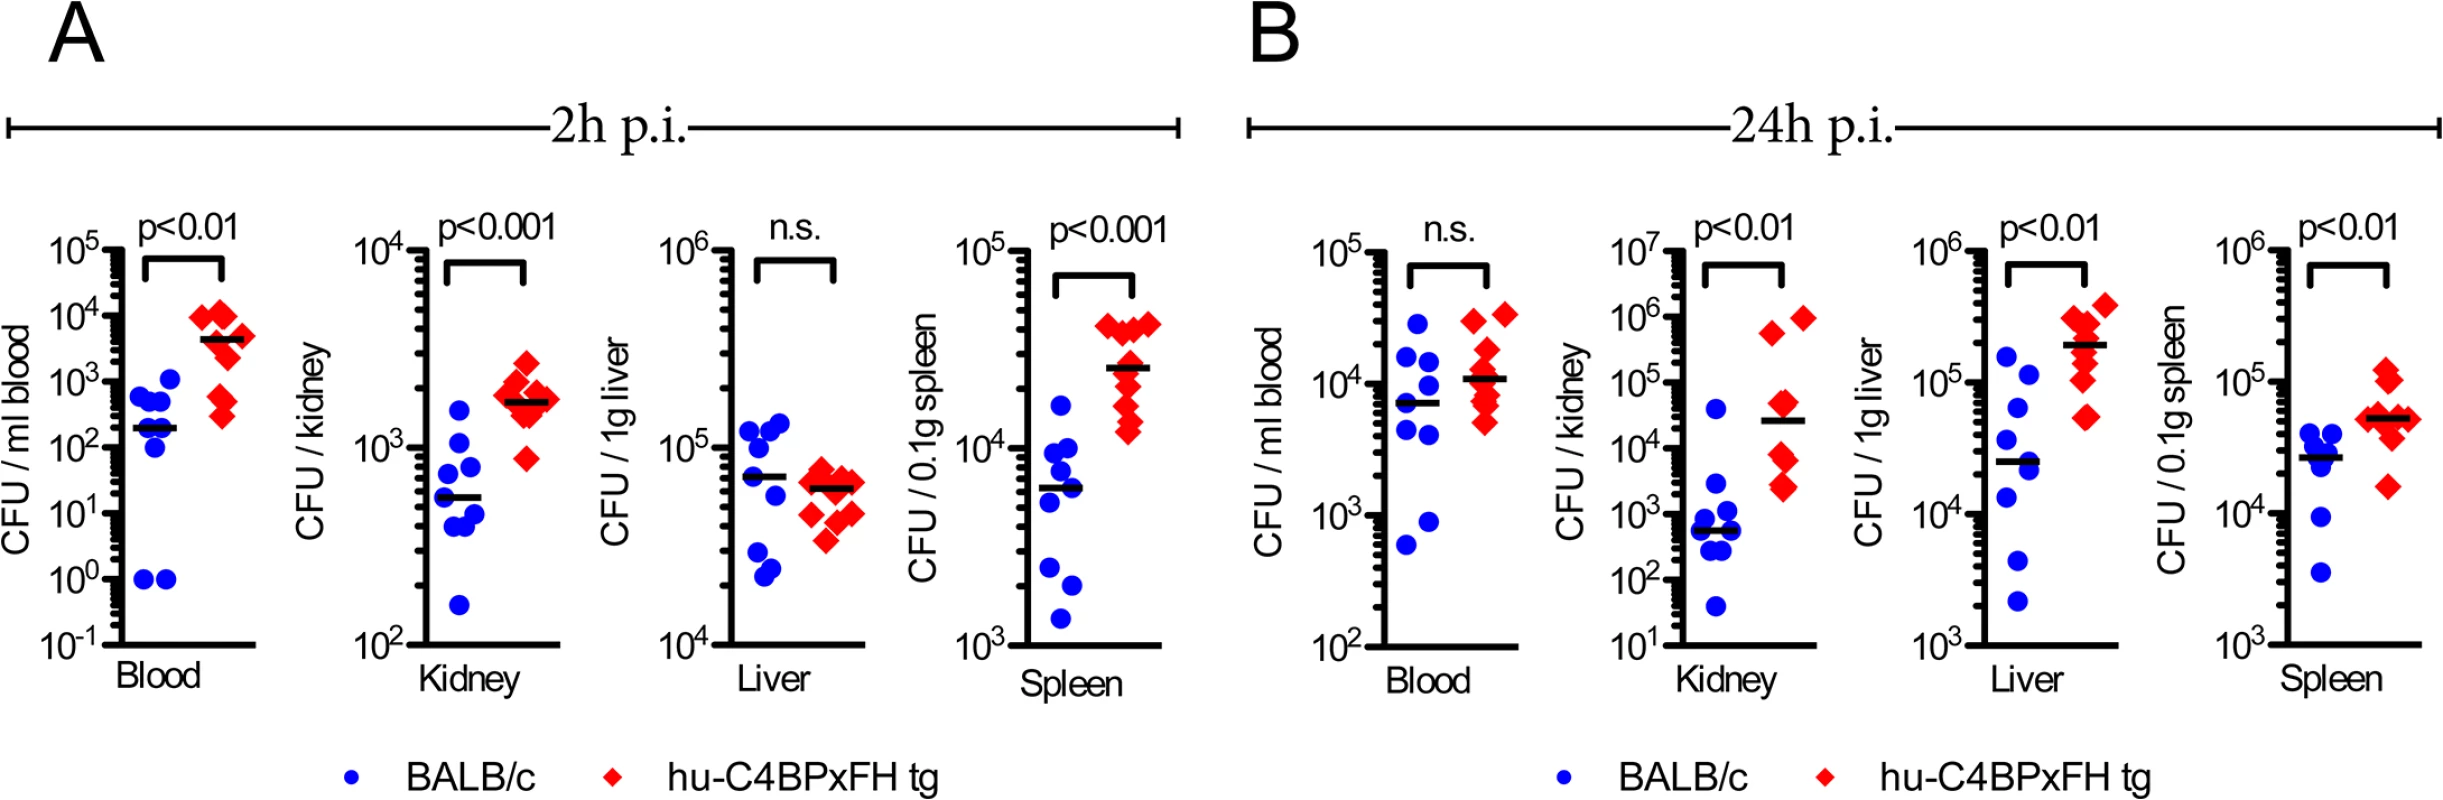 Hu-C4BPxFH tg mice show increased bacterial dissemination in organs.